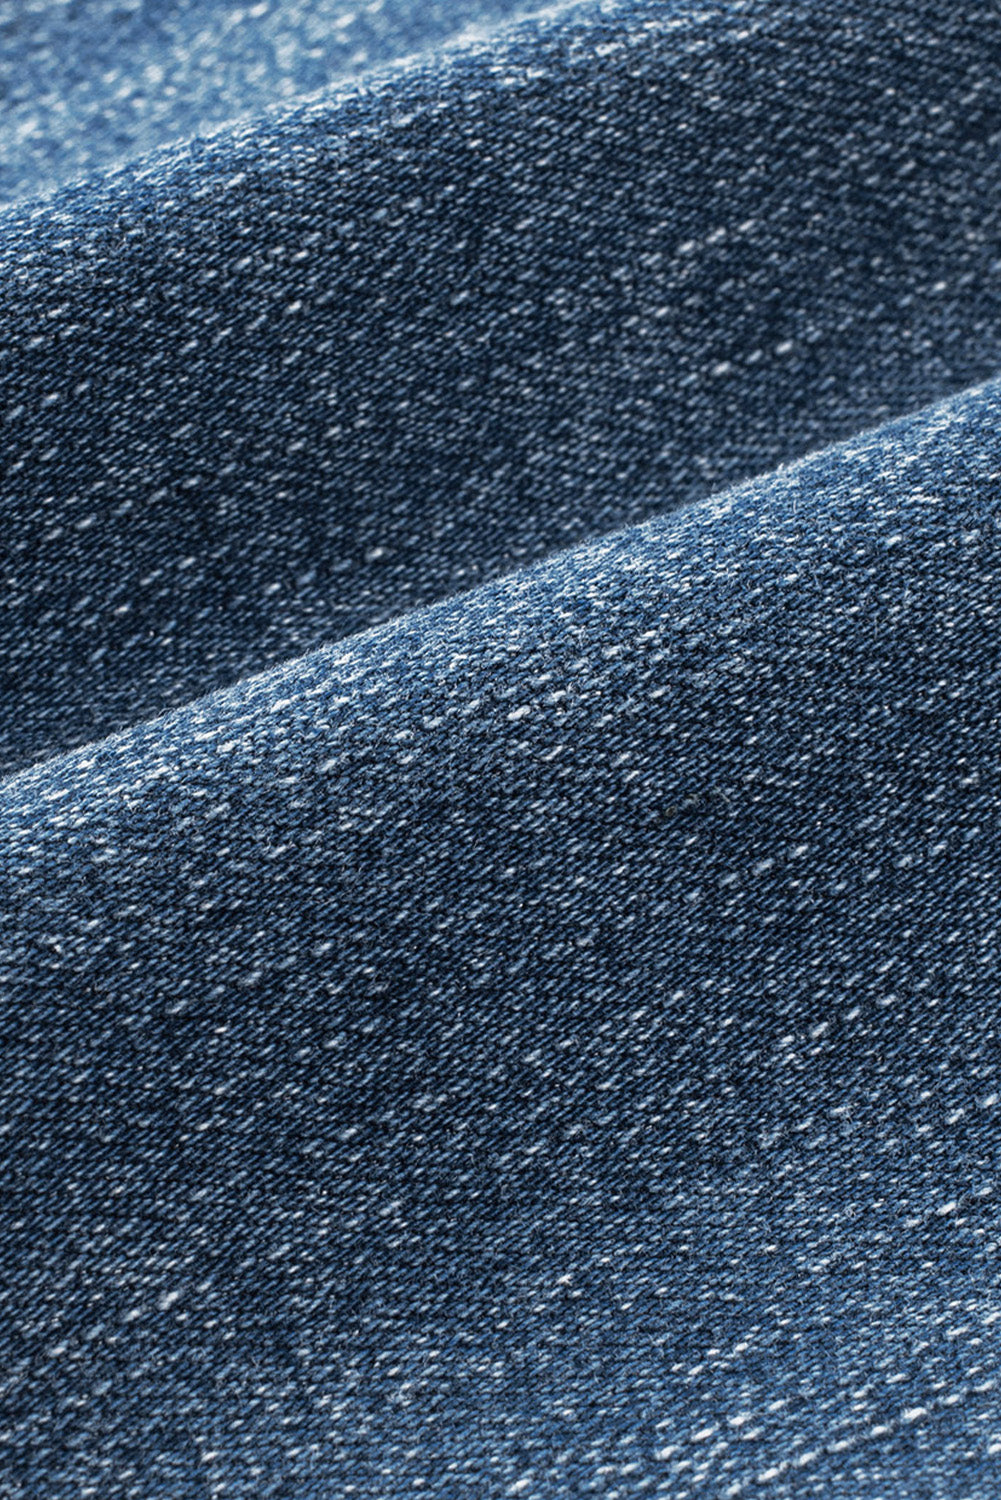 a close up of a blue denim fabric